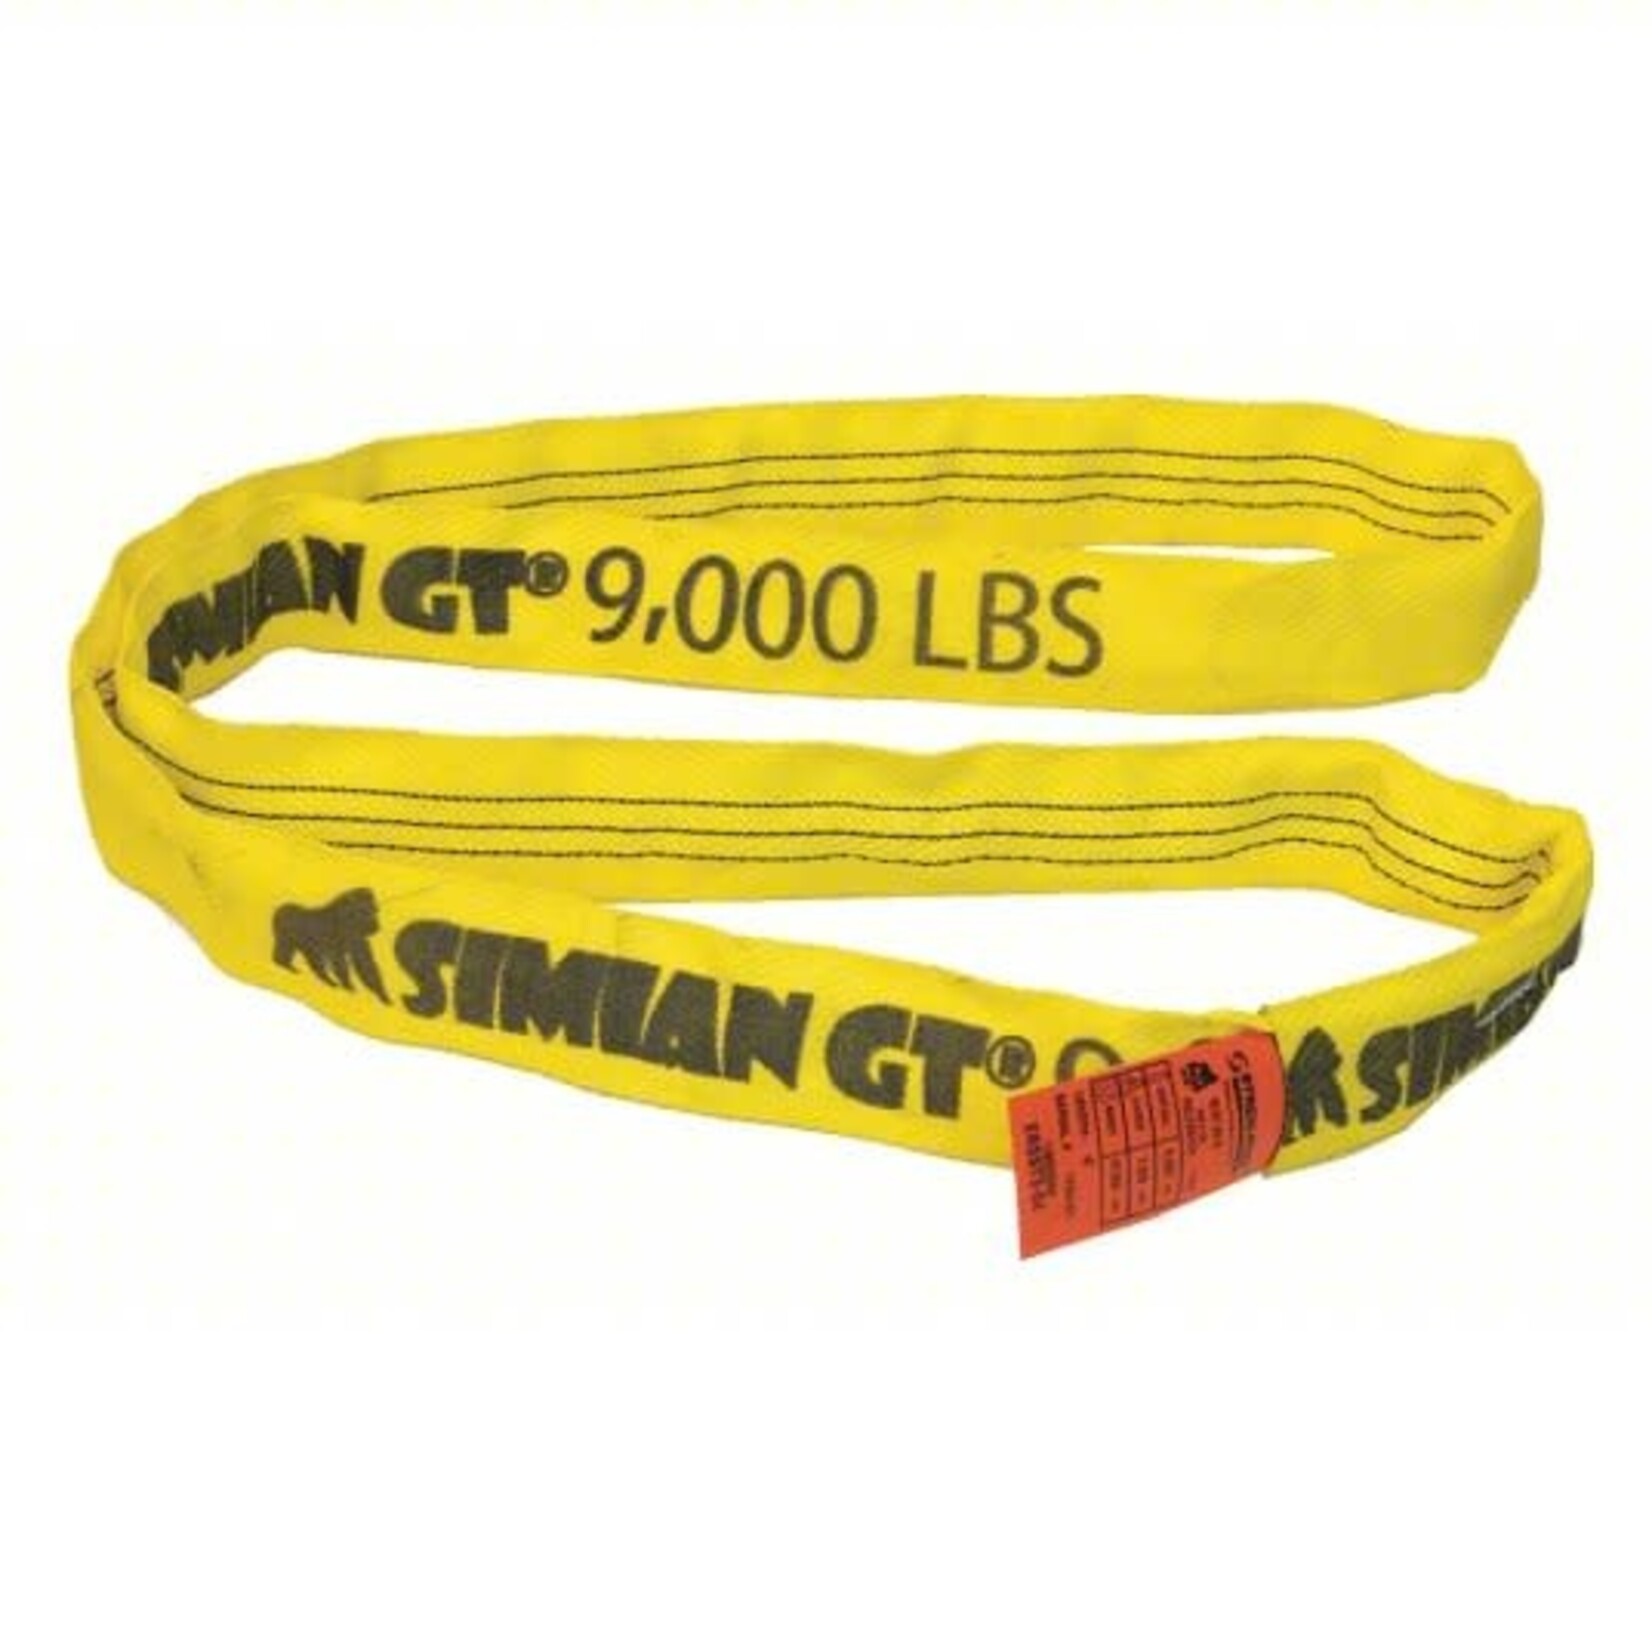 Stren-Flex SIMIAN® GT Roundsling - Yellow - Endless - 9,000 lbs